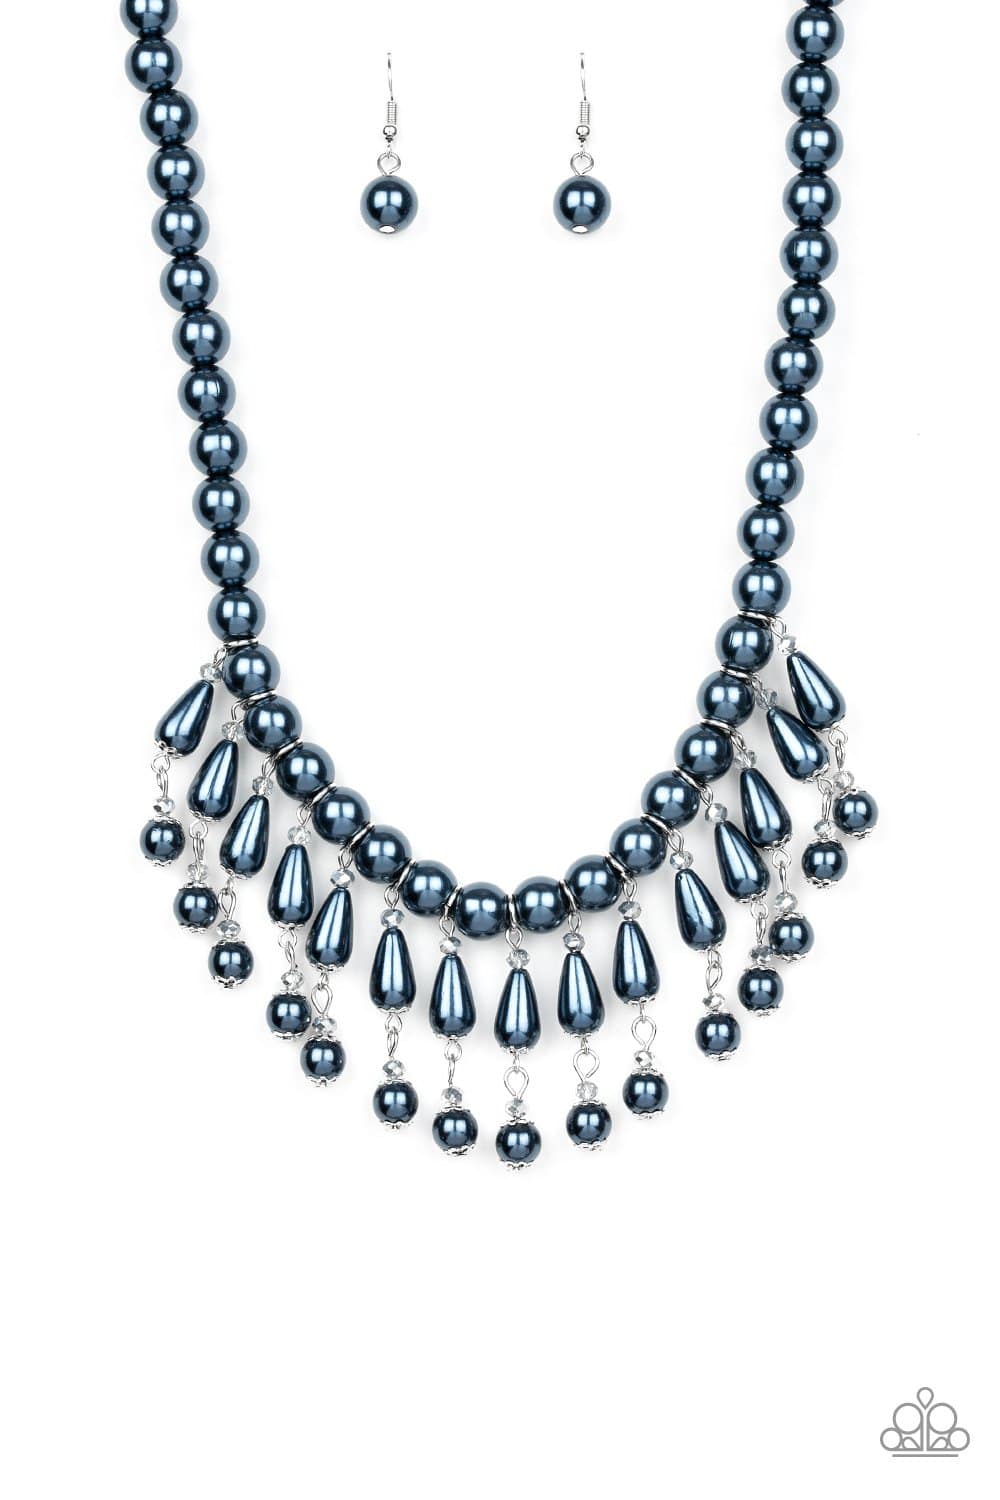 Miss Majestic - Blue Teardrop Bead Necklace - Paparazzi Accessories - GlaMarous Titi Jewels